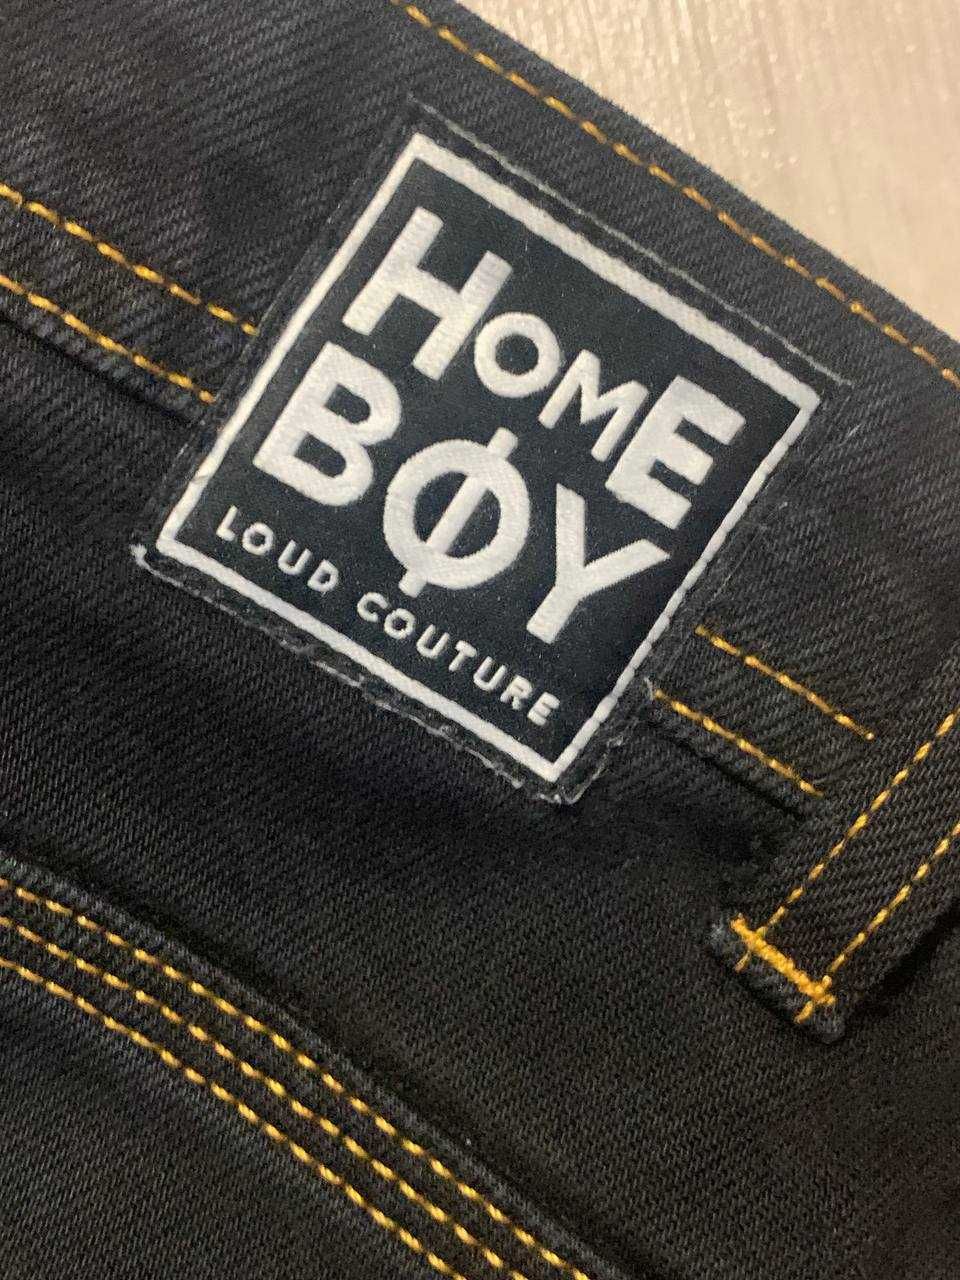 джинсы big boy (home boy)